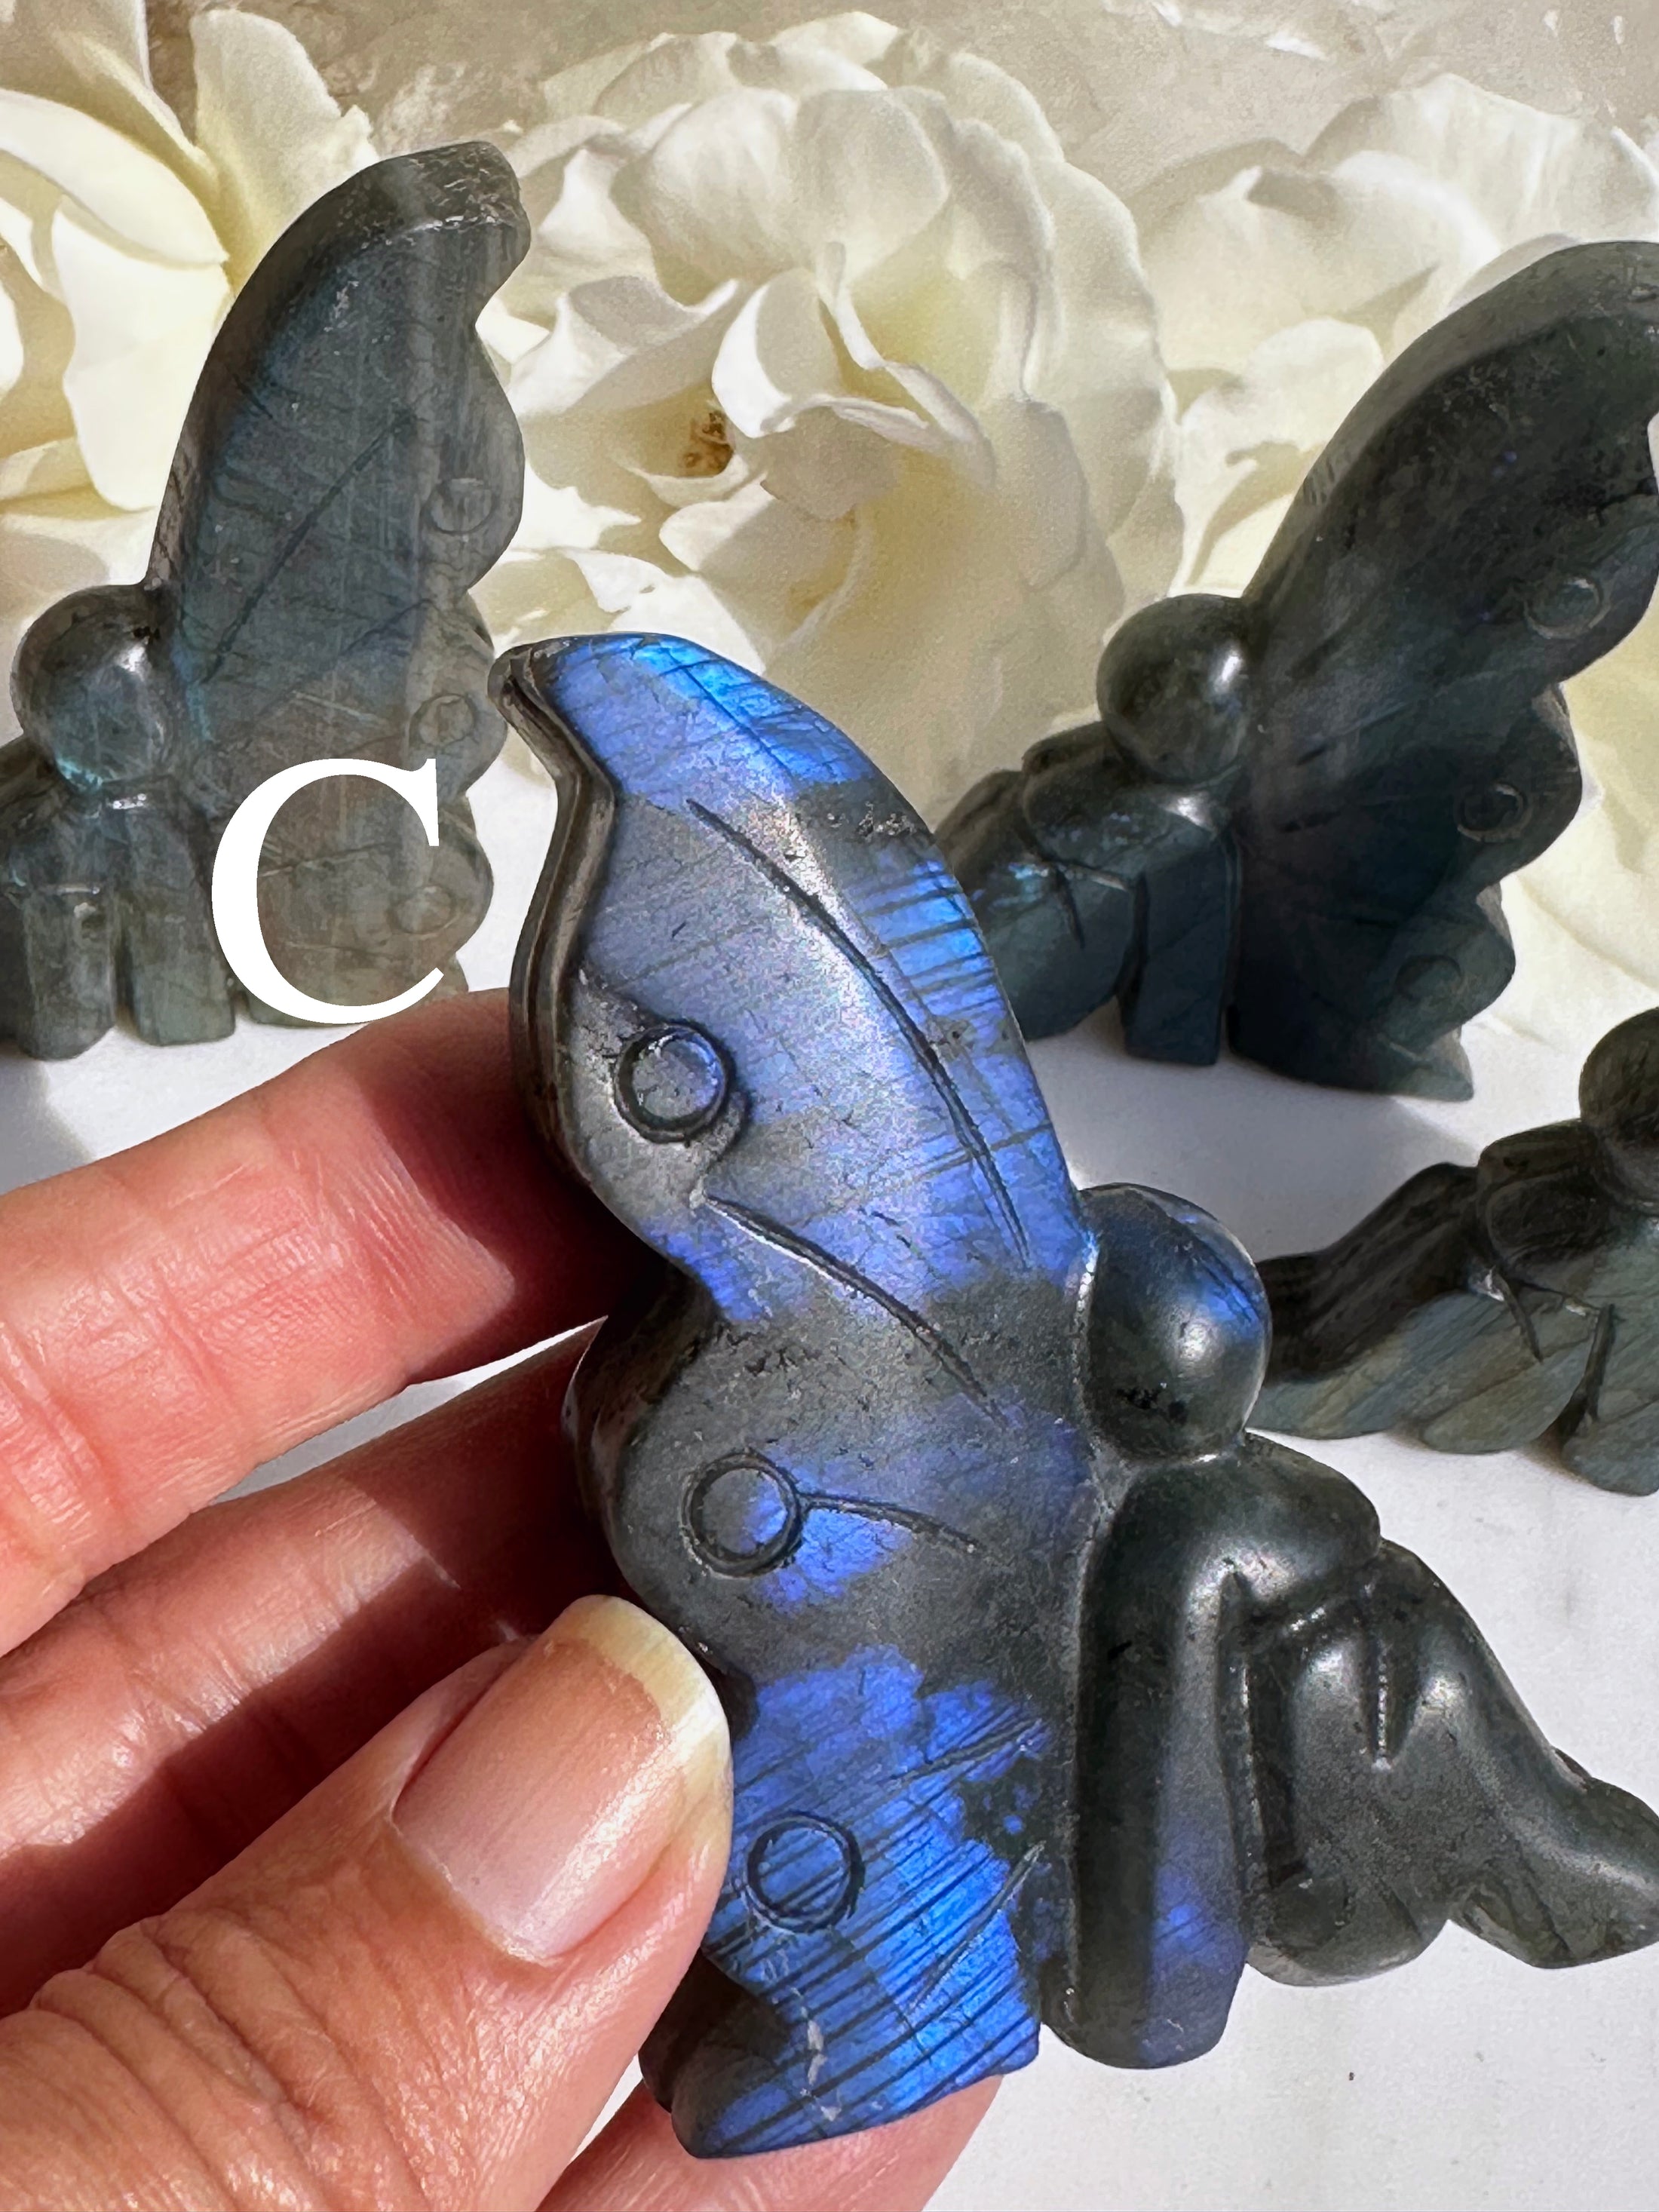 Full Flash Labradorite Fairy Carving|Healing Crystal|Crystal Labradorite Animal Fairy Carvings|Energy Stone|Unique Gift